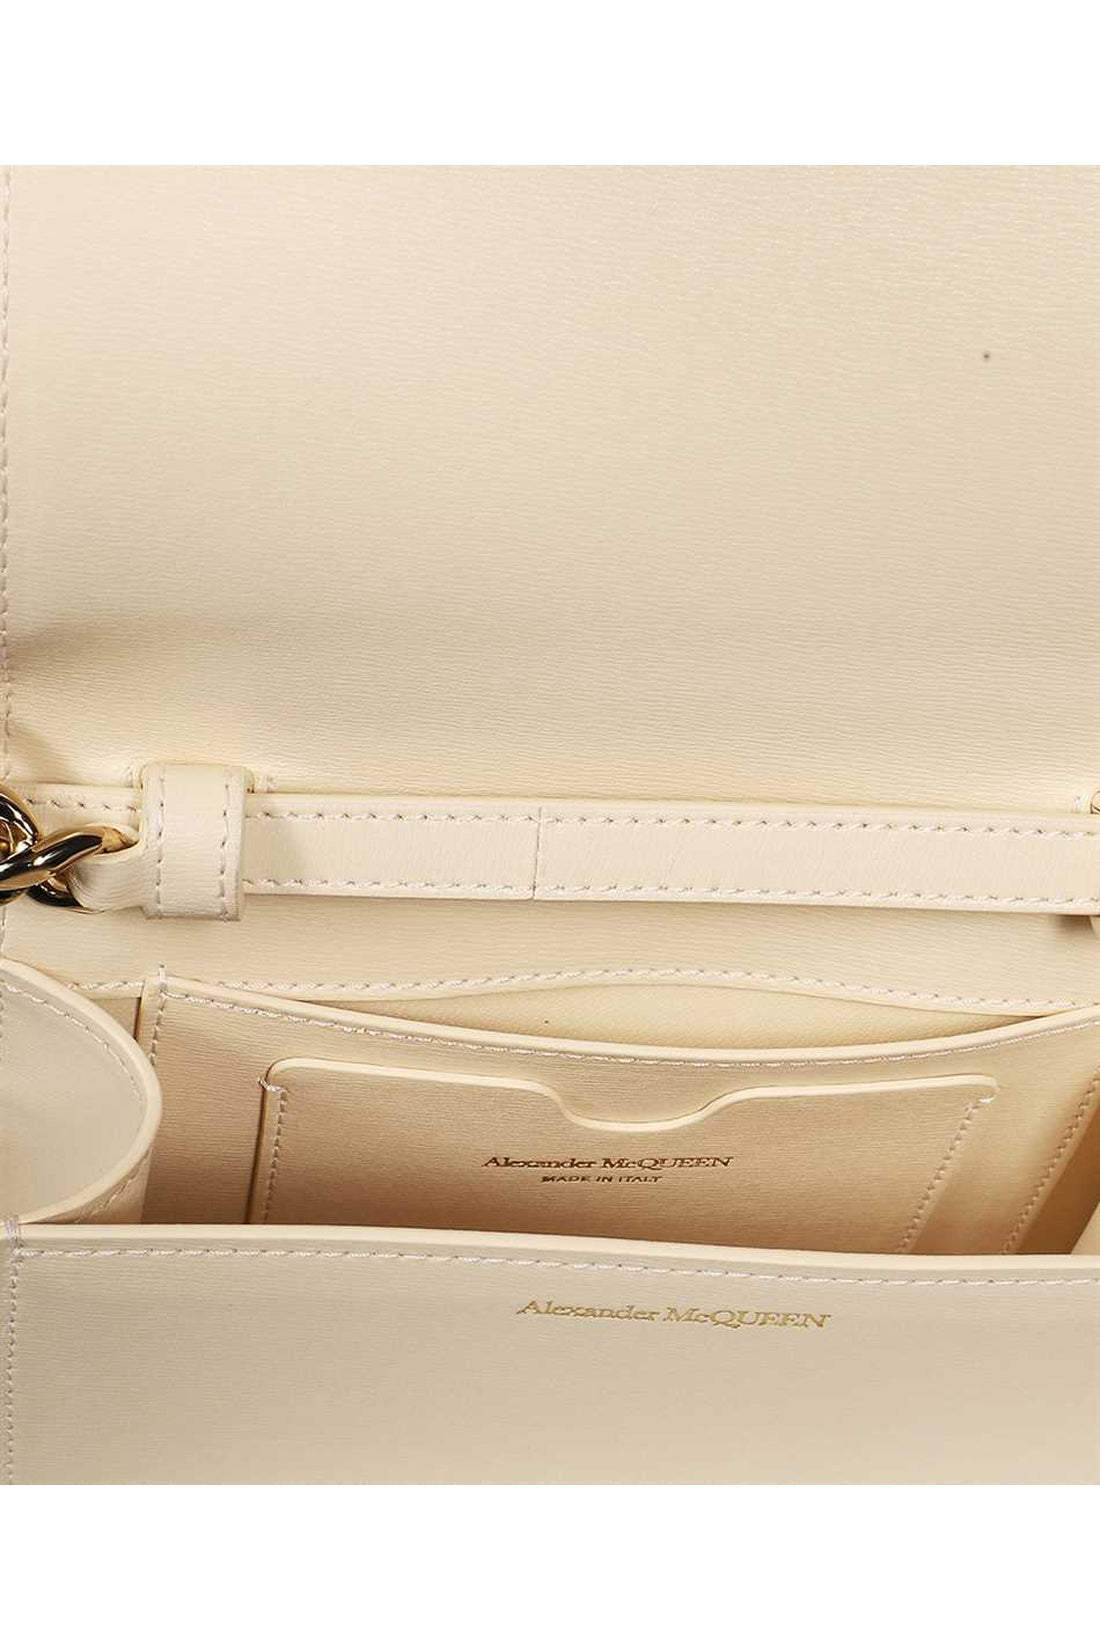 Alexander McQueen-OUTLET-SALE-The Four Ring Mini leather mini-bag-ARCHIVIST